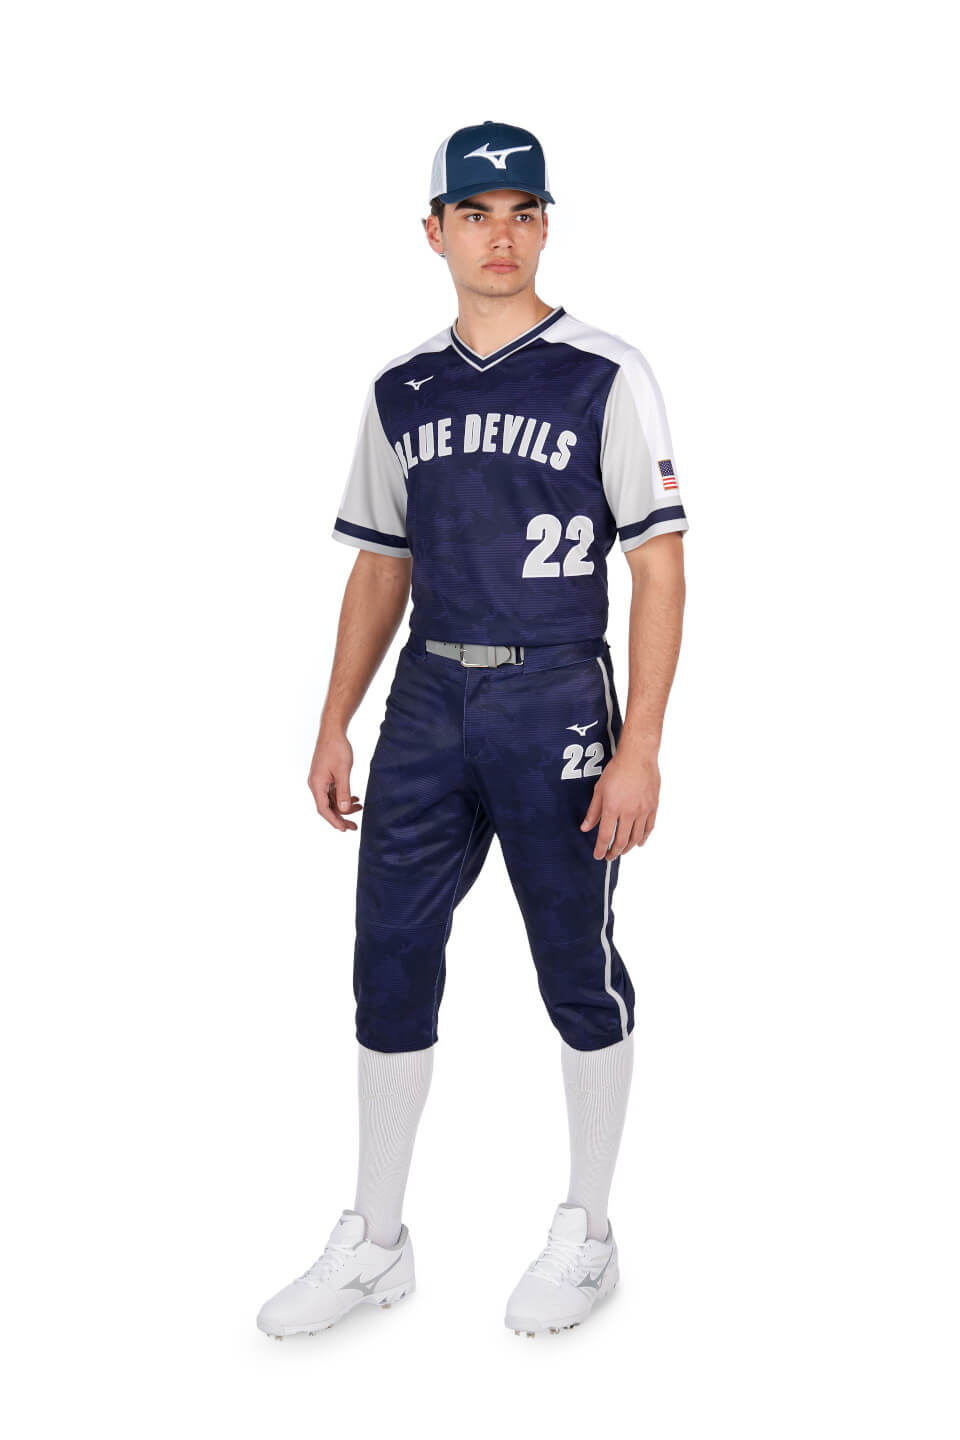 youth baseball uniforms